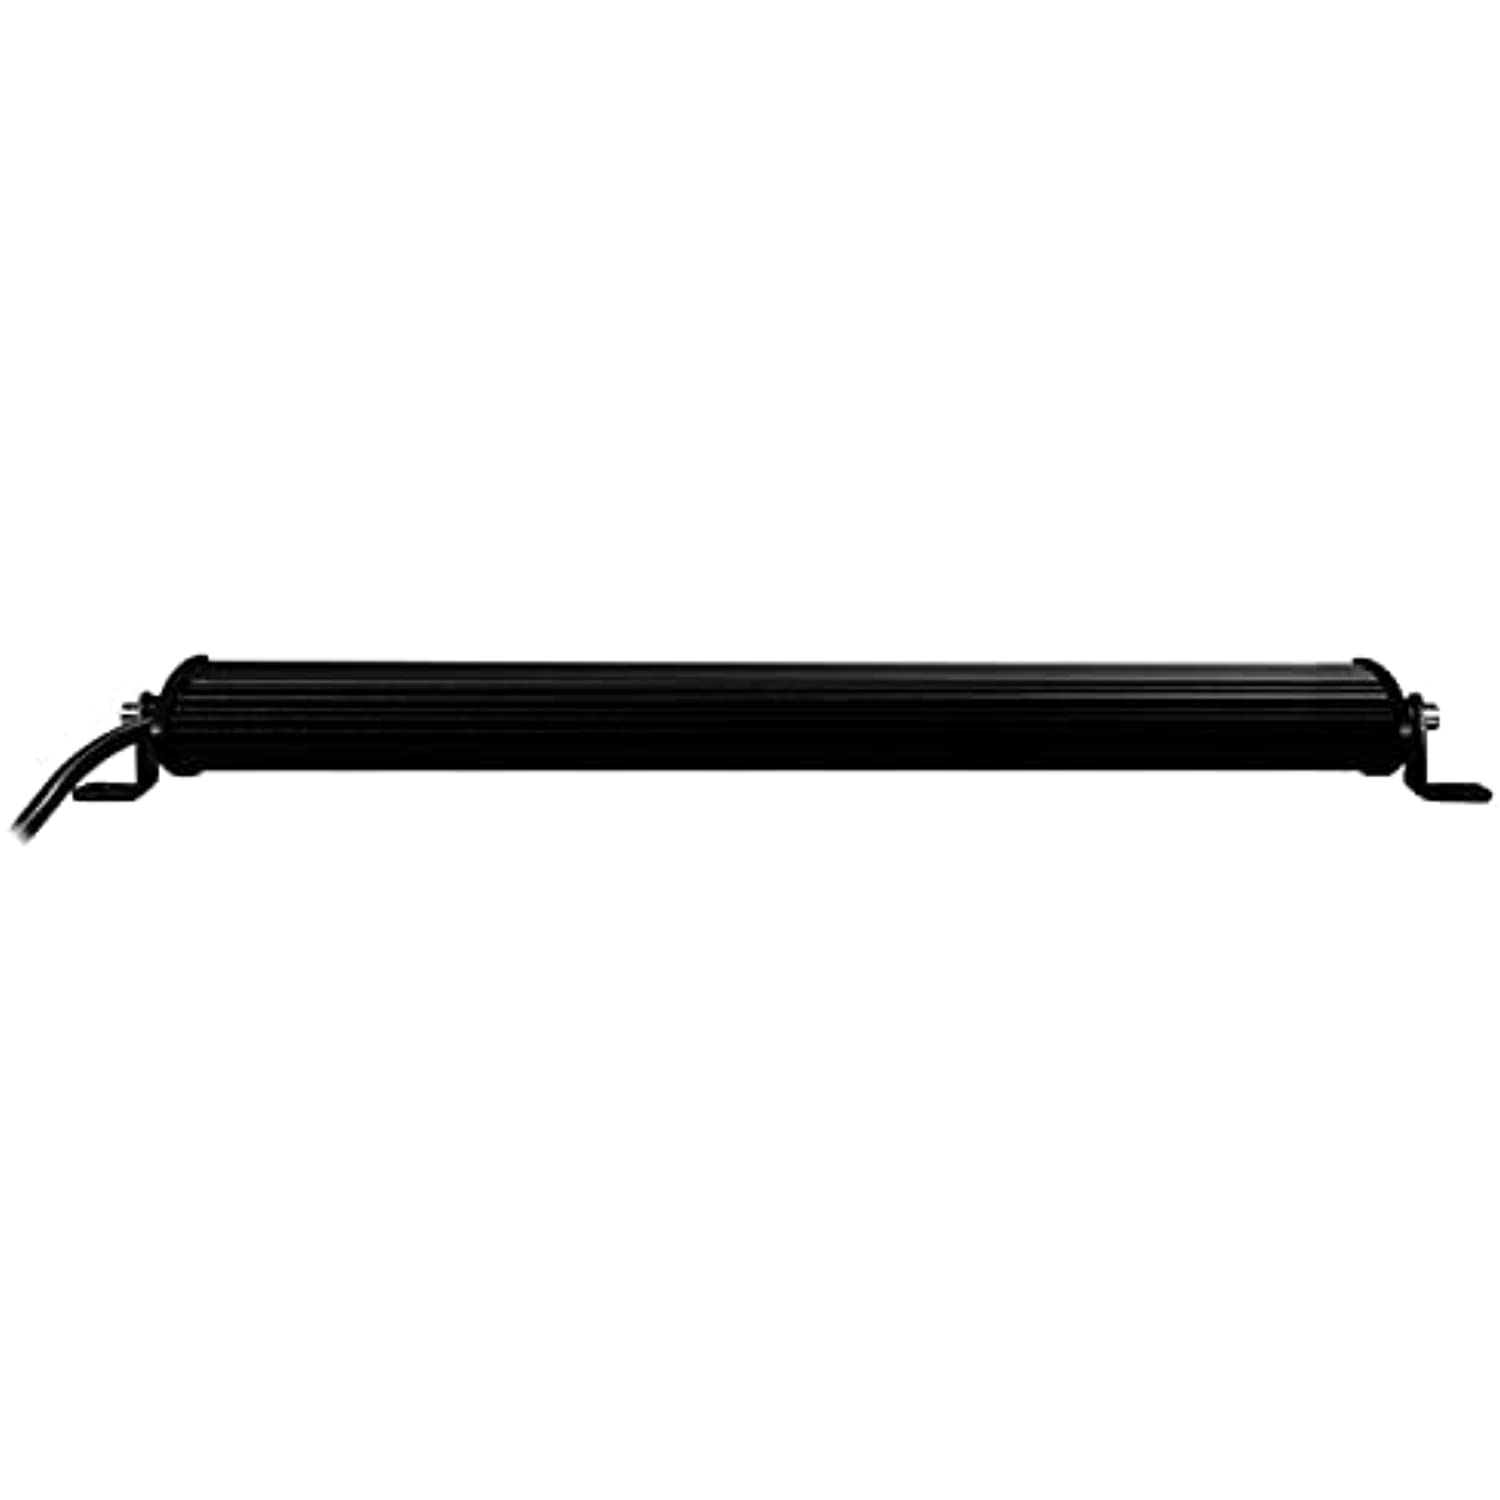 METRA - Ultra Slim Single Row LED Lightbar - 13.5 Inch (DL-US135)